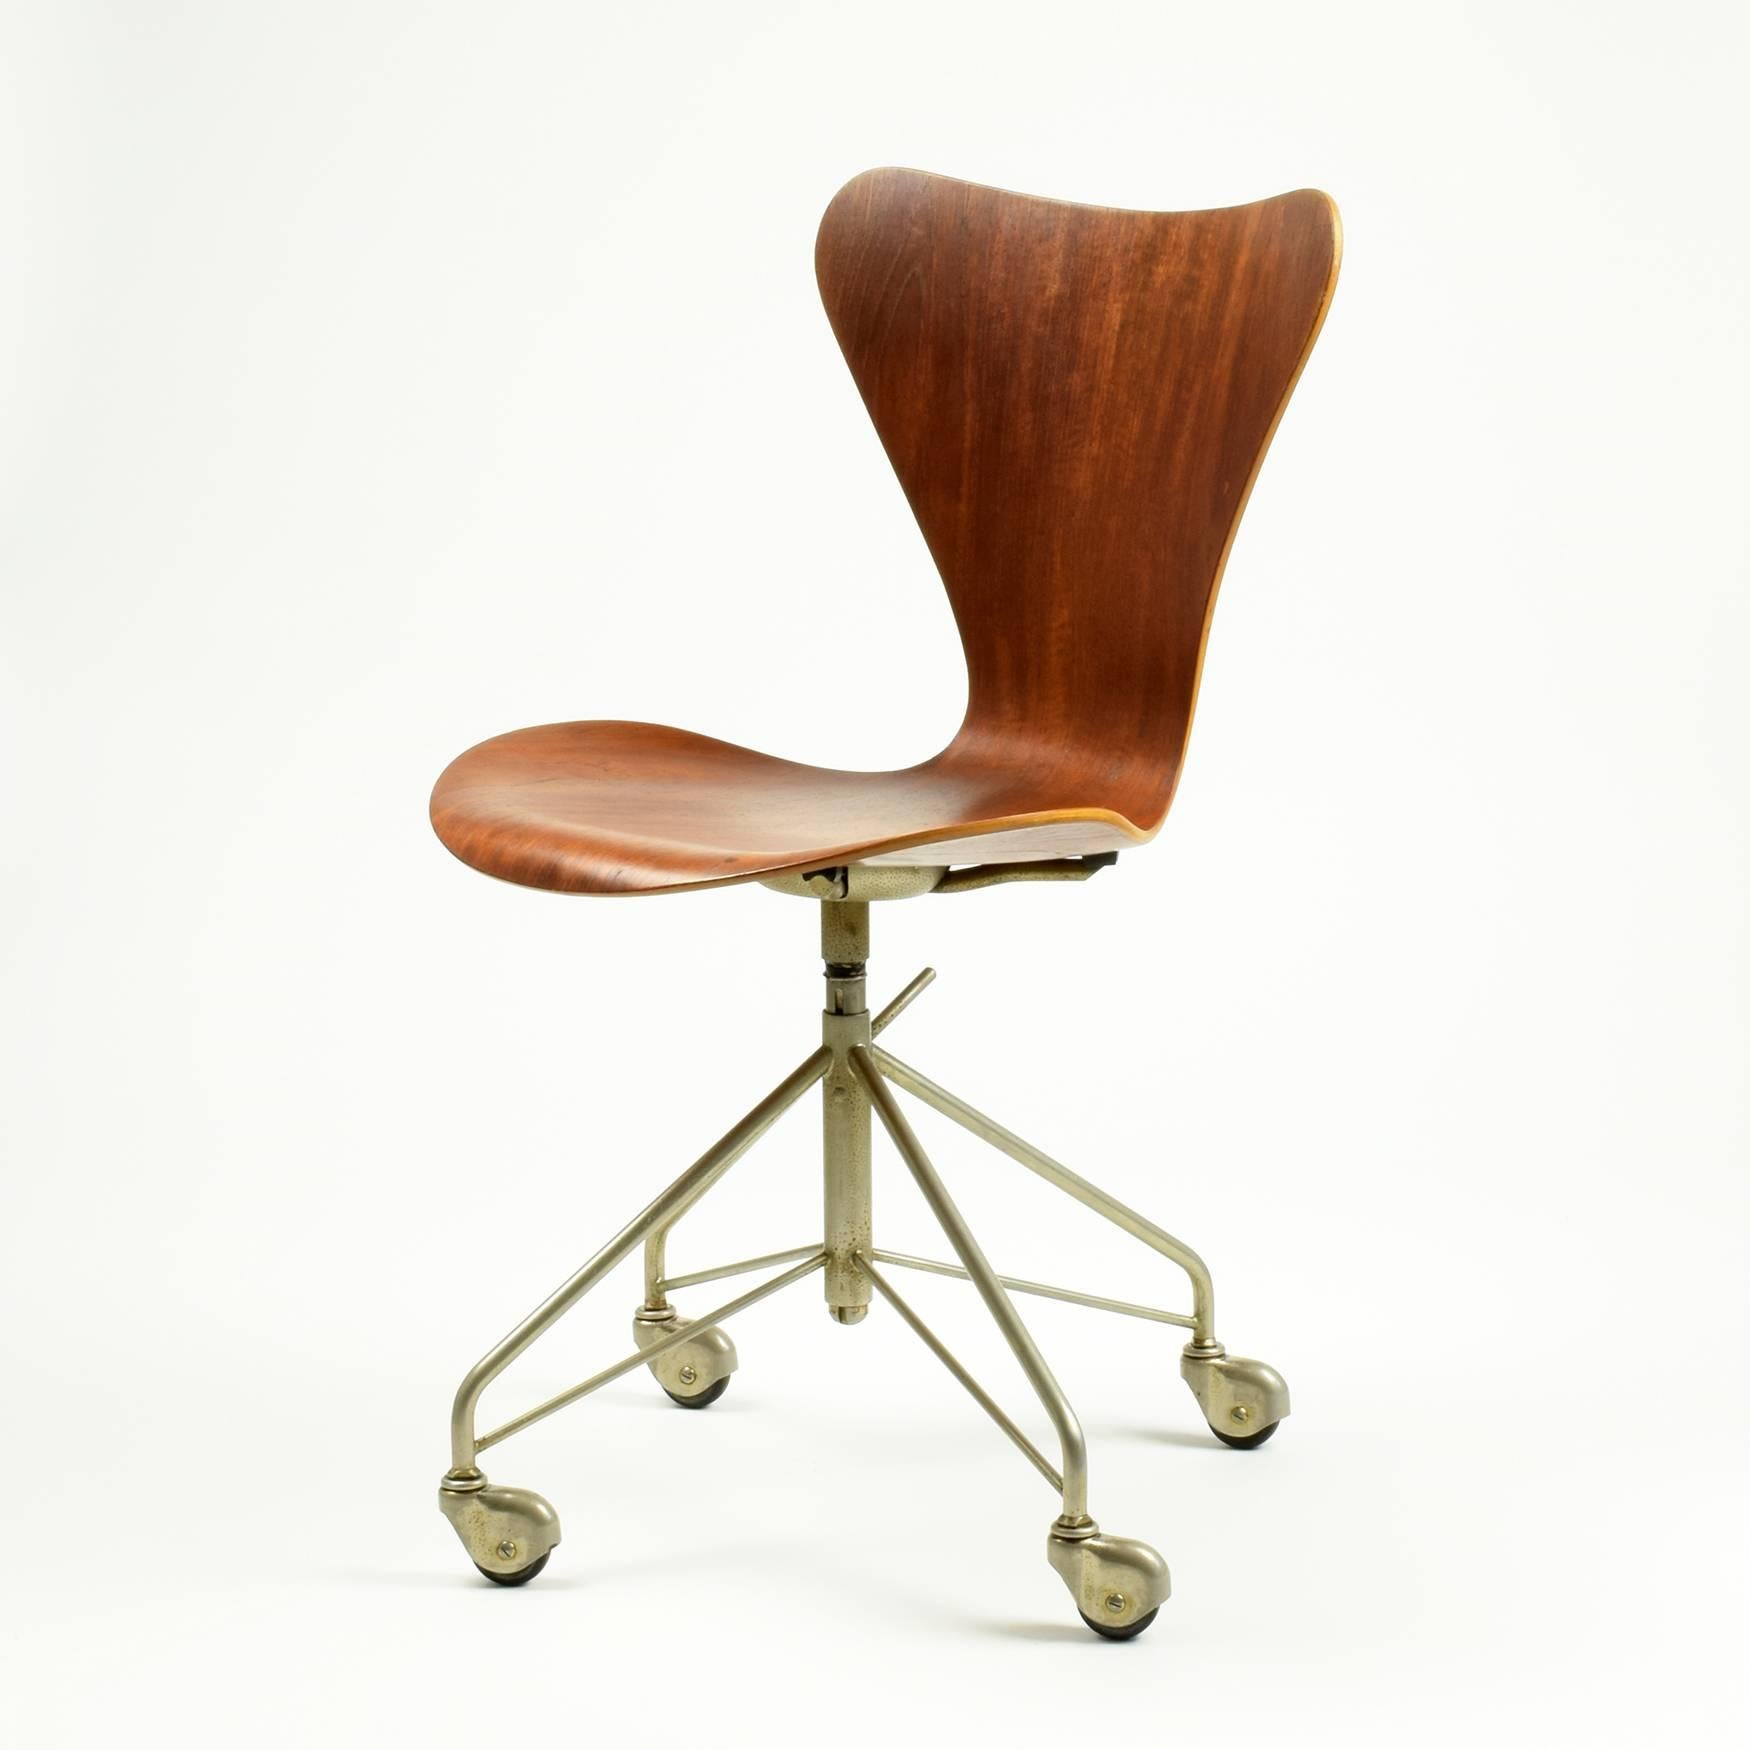 Arne Jacobsen

Fritz Hansen (manufacturer), Denmark

Model 3117 desk chair, 1955

Teak veneered plywood, nickel-plated steel, swivel base on castors, height adjustable.

FH (Fritz Hansen) stamped to metal underside of seat.

This is a